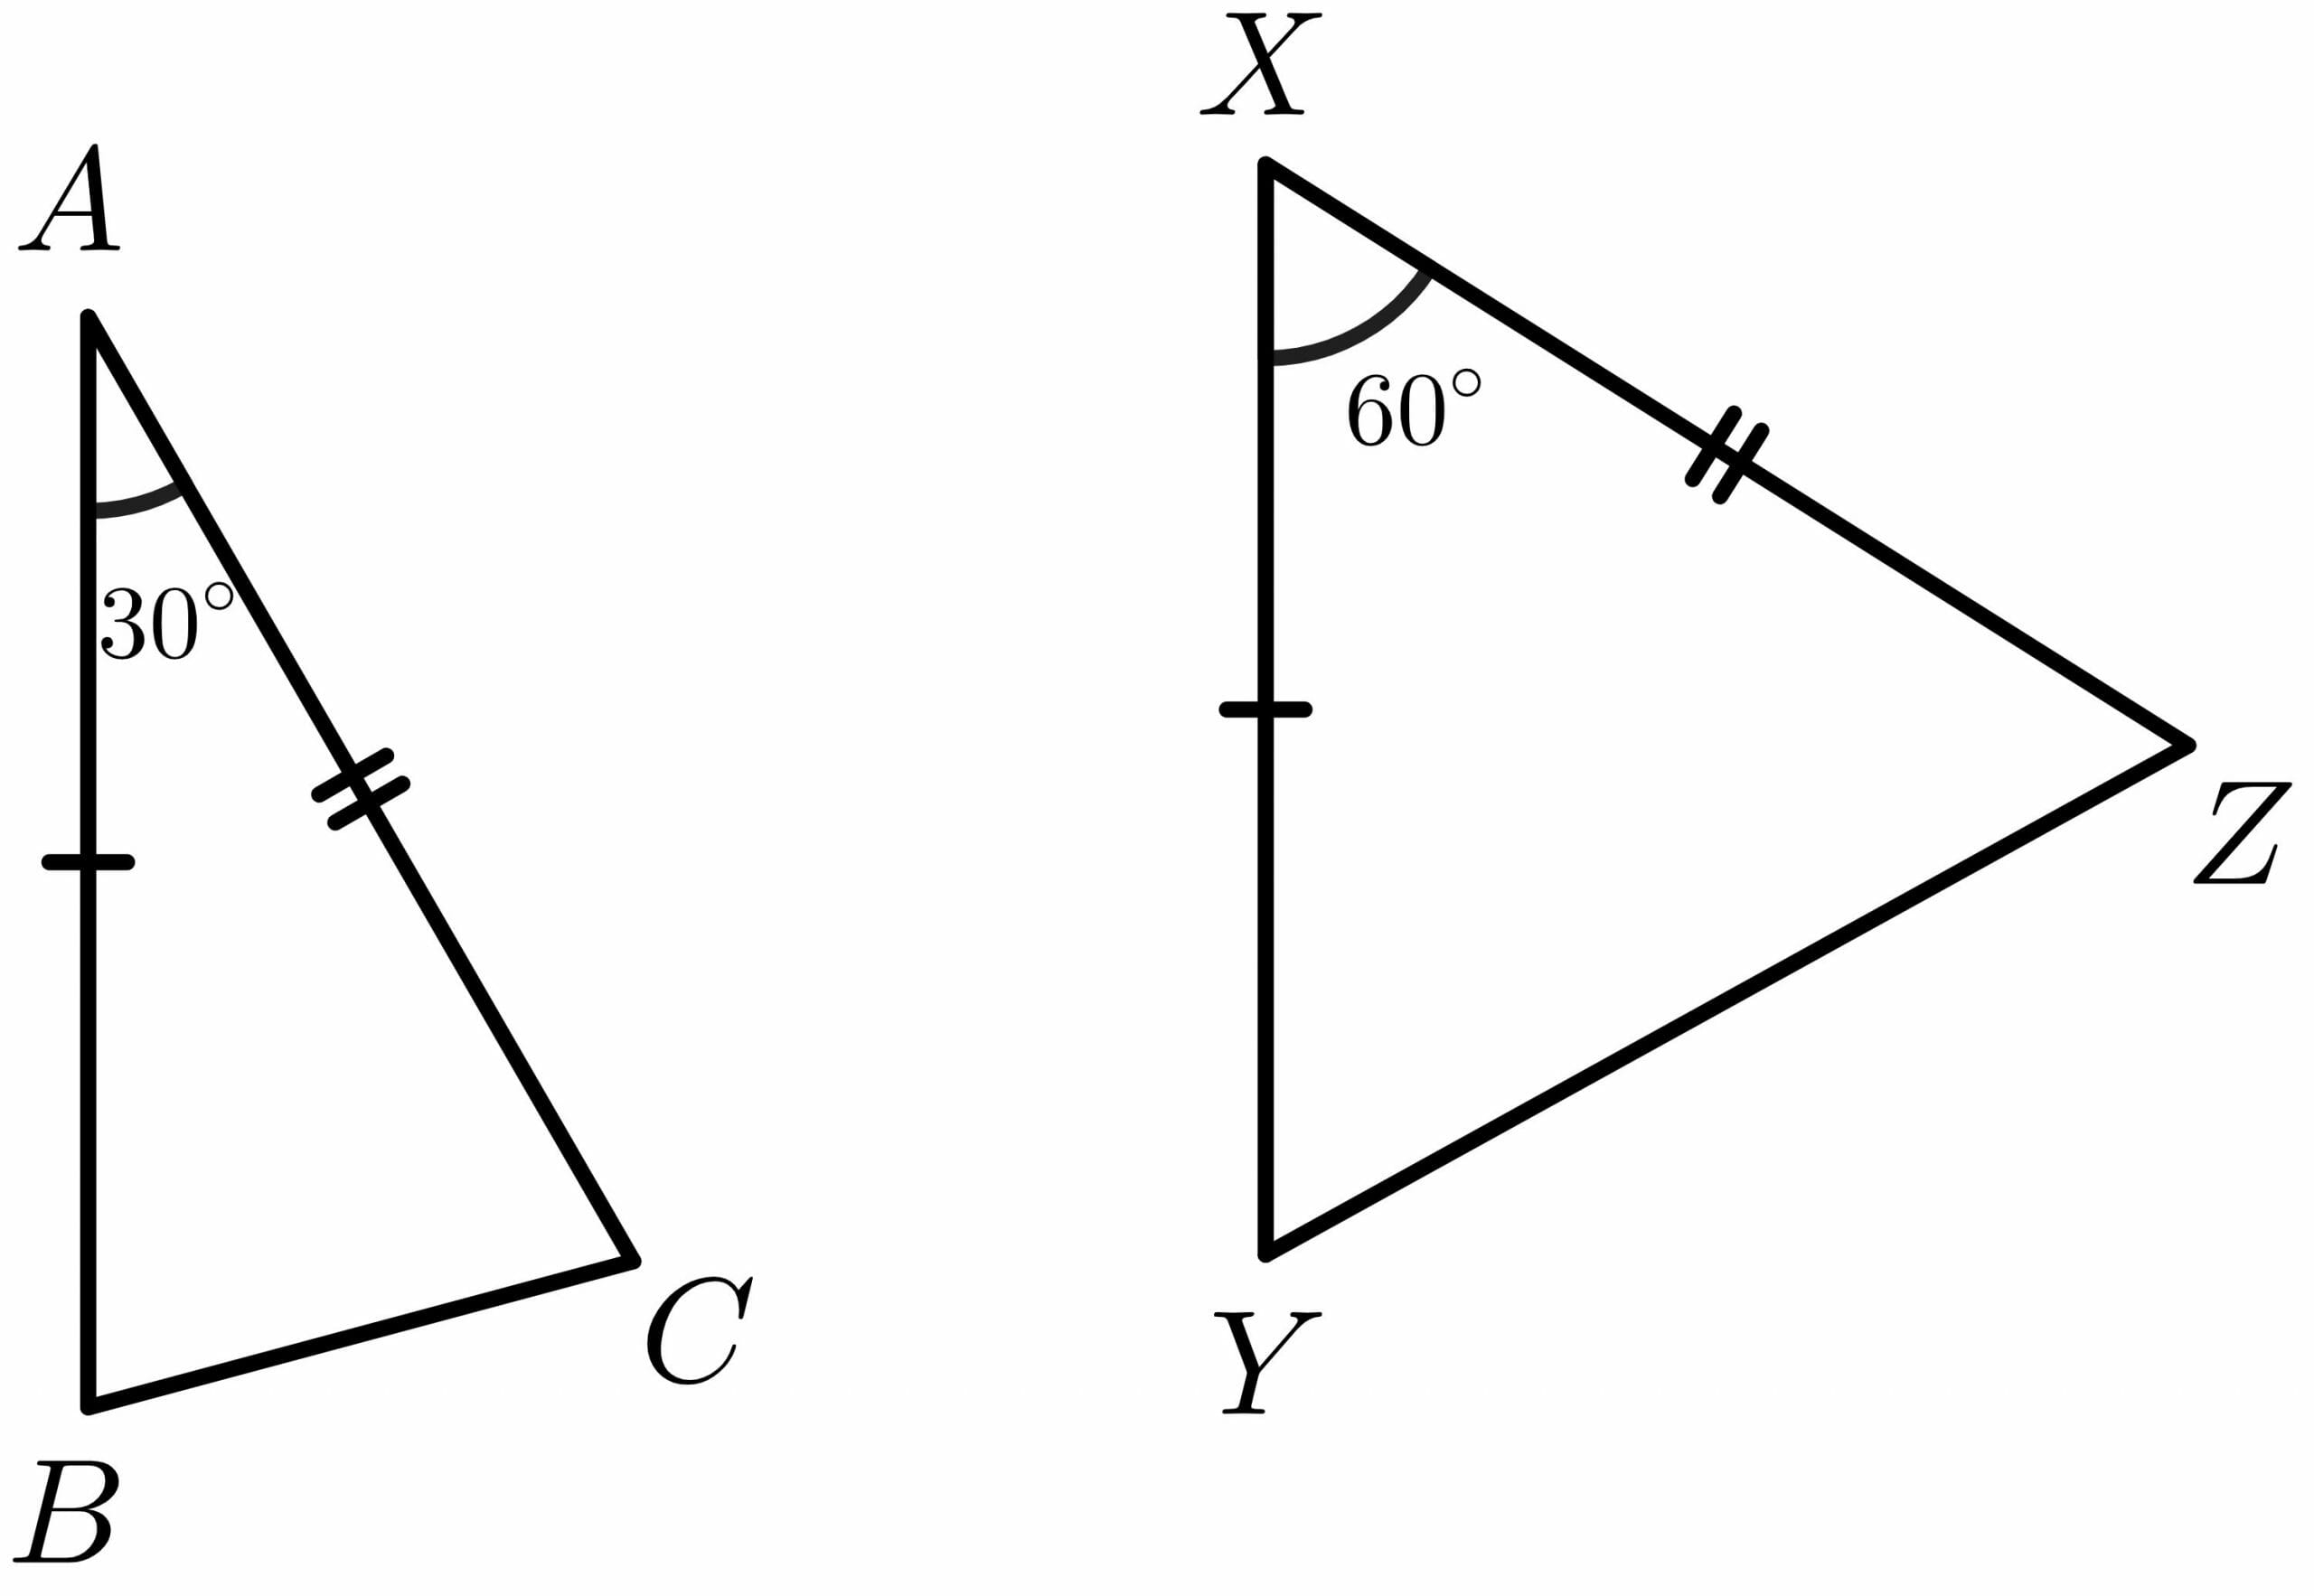 Hinge theorem example